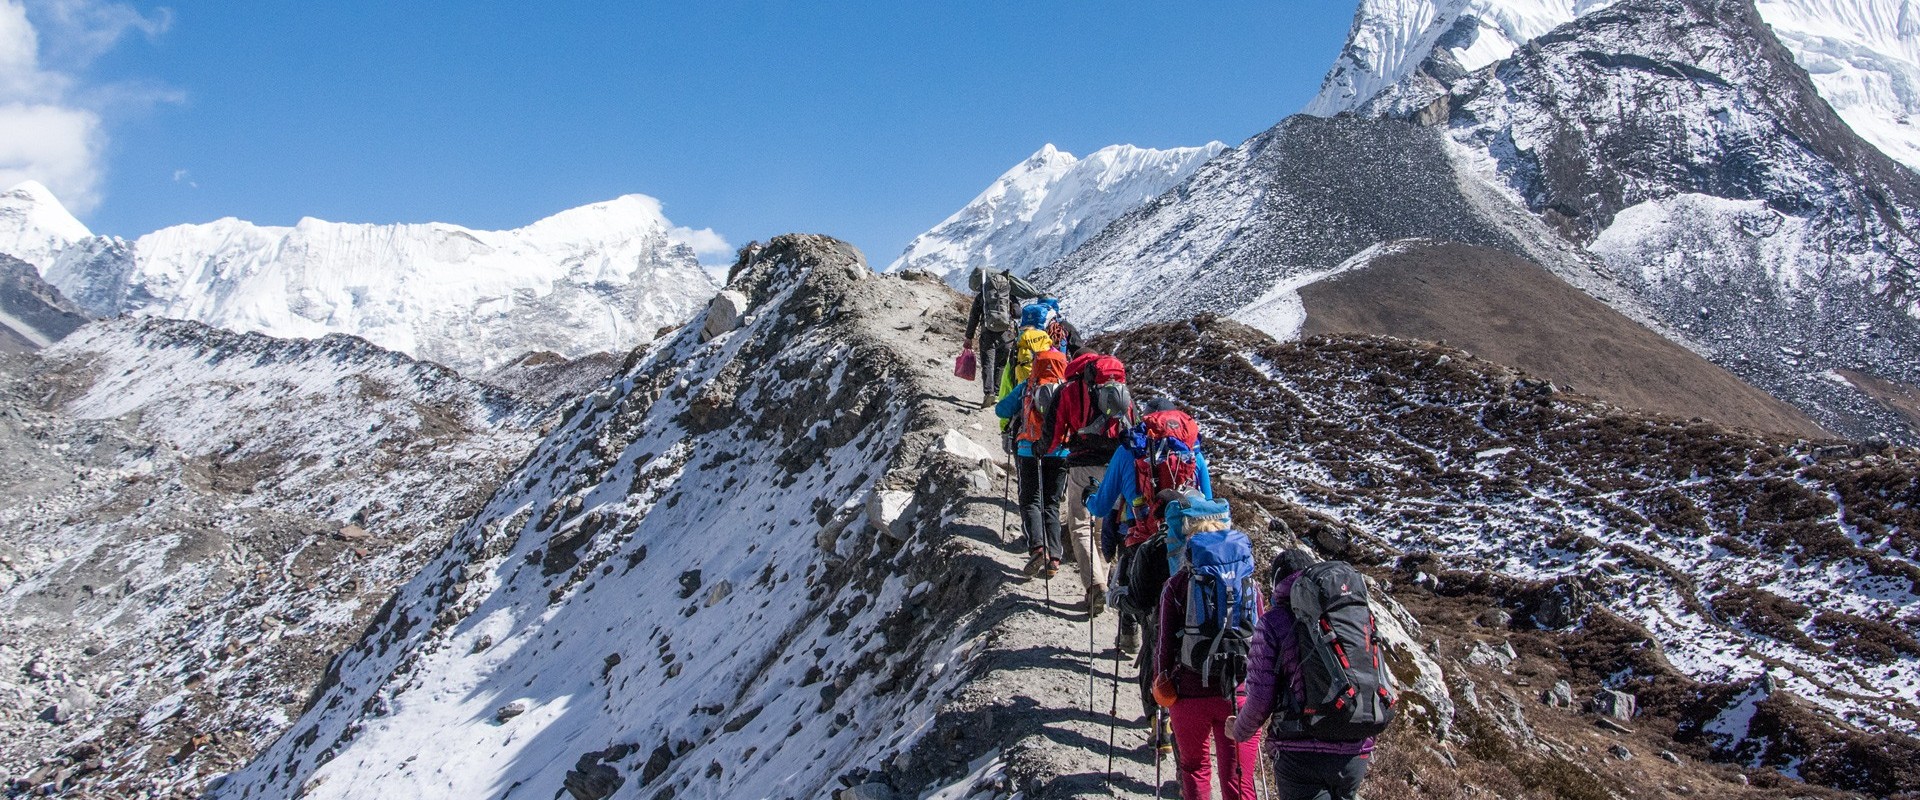 Nepal trekking tours tripadvisor